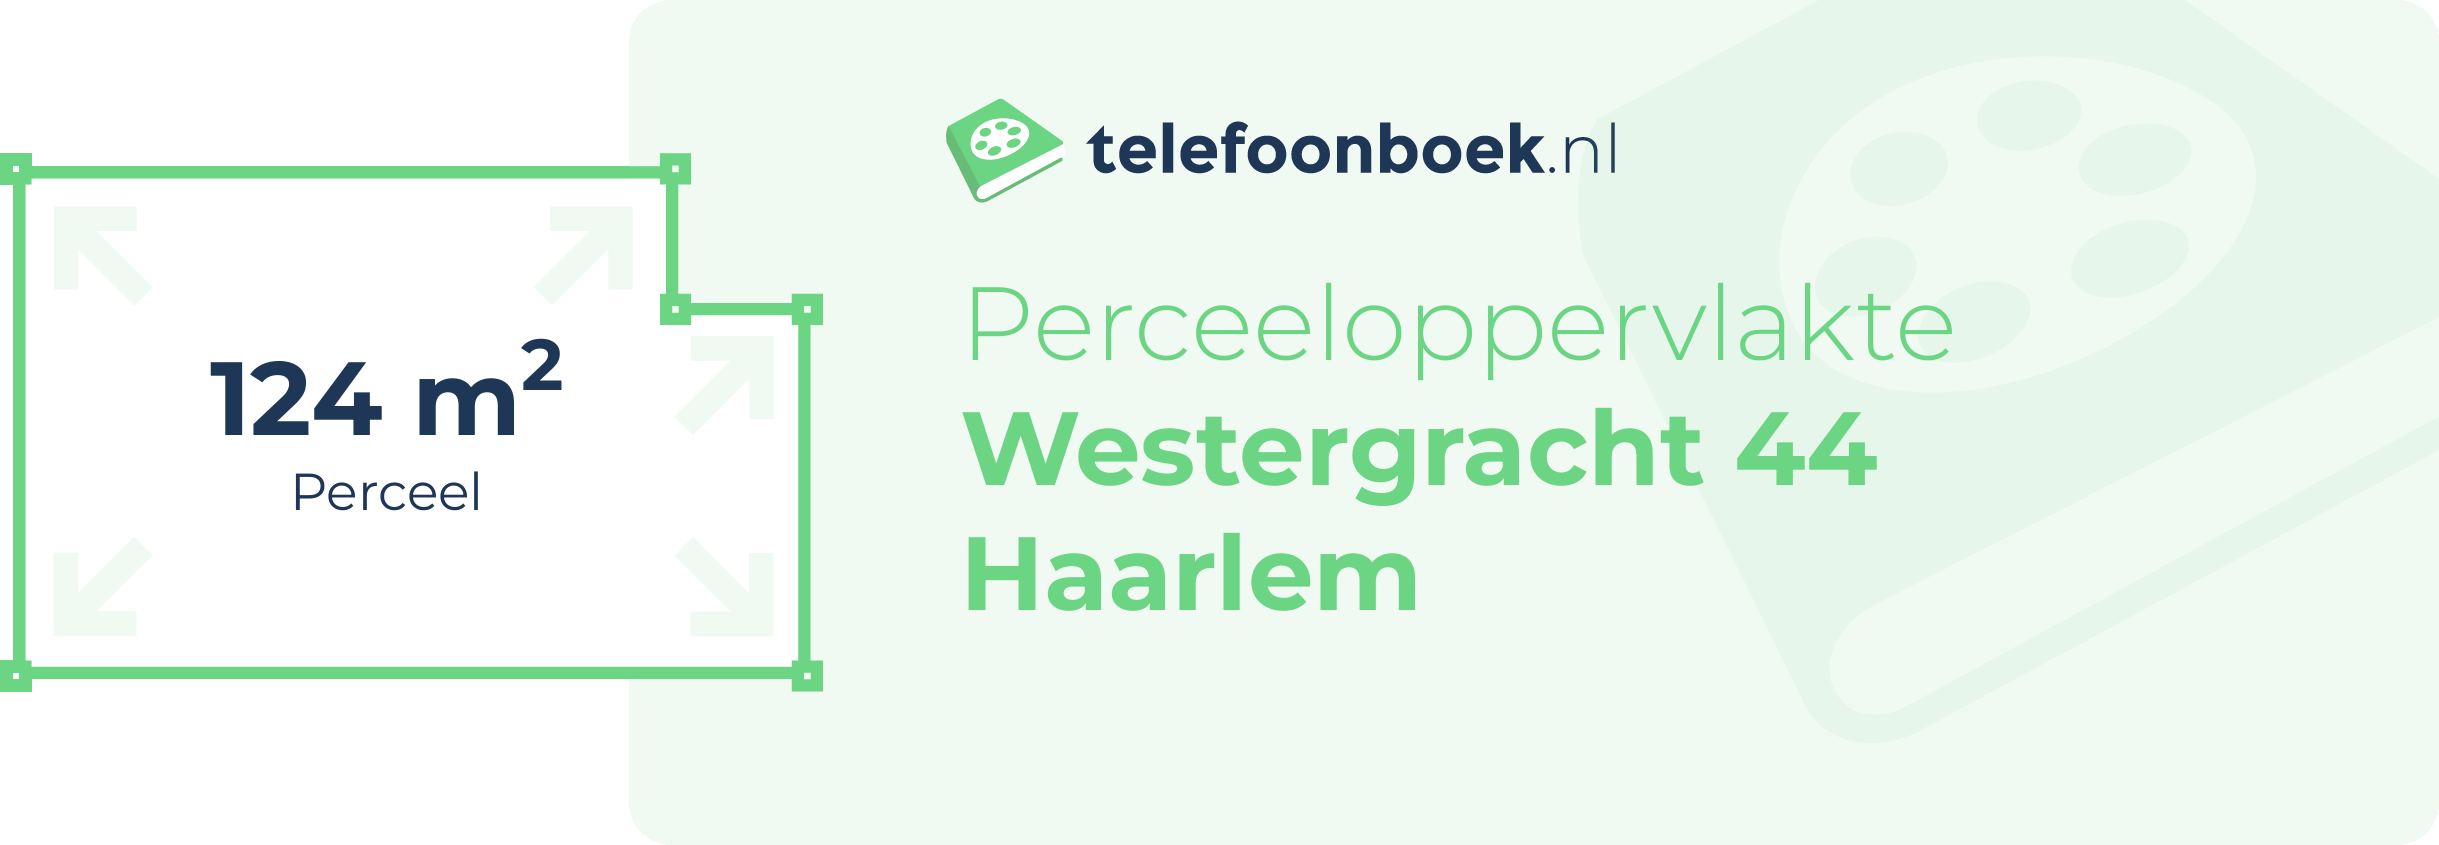 Perceeloppervlakte Westergracht 44 Haarlem